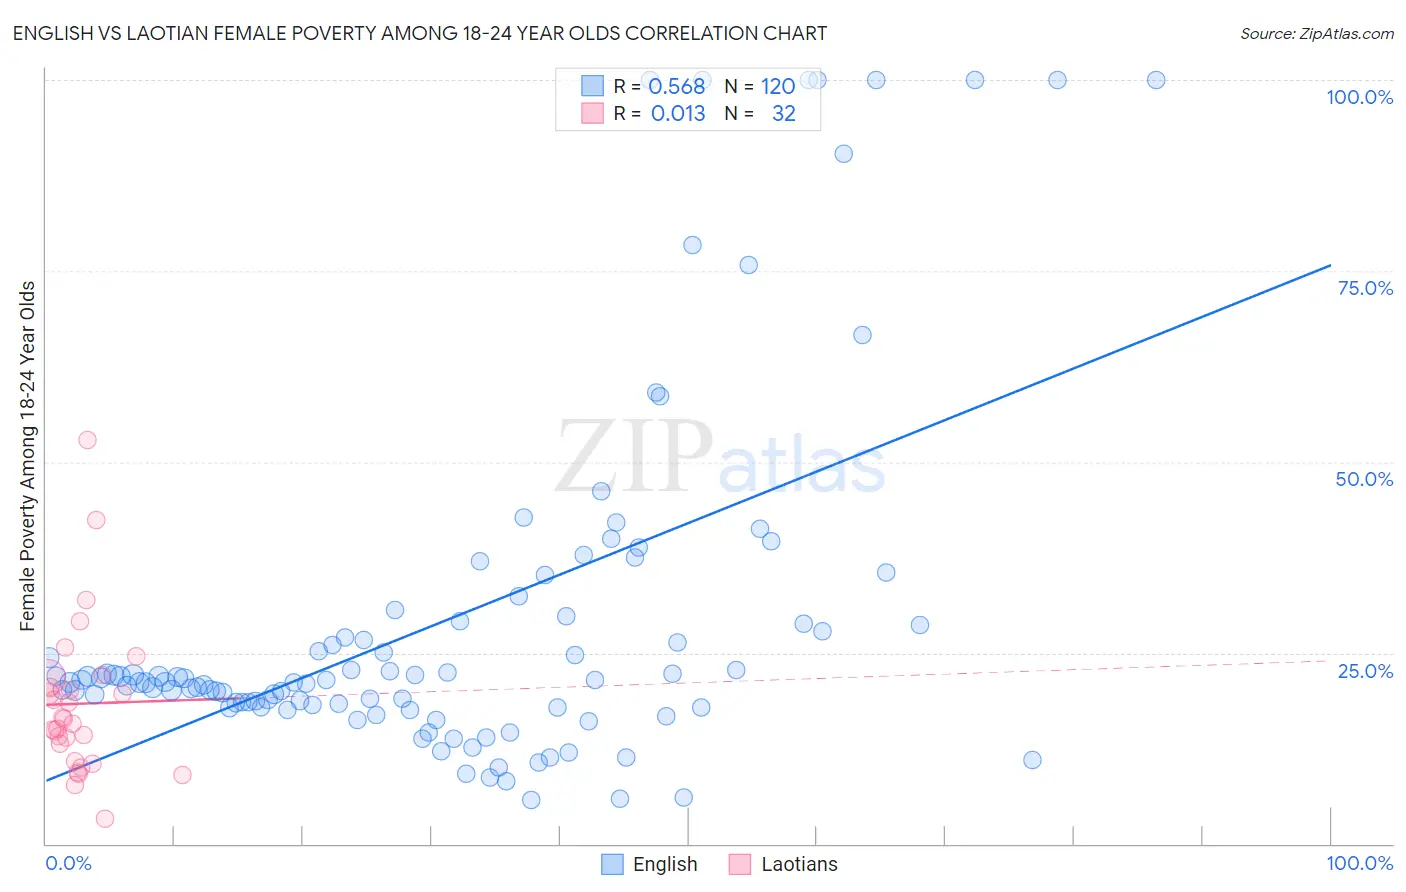 English vs Laotian Female Poverty Among 18-24 Year Olds